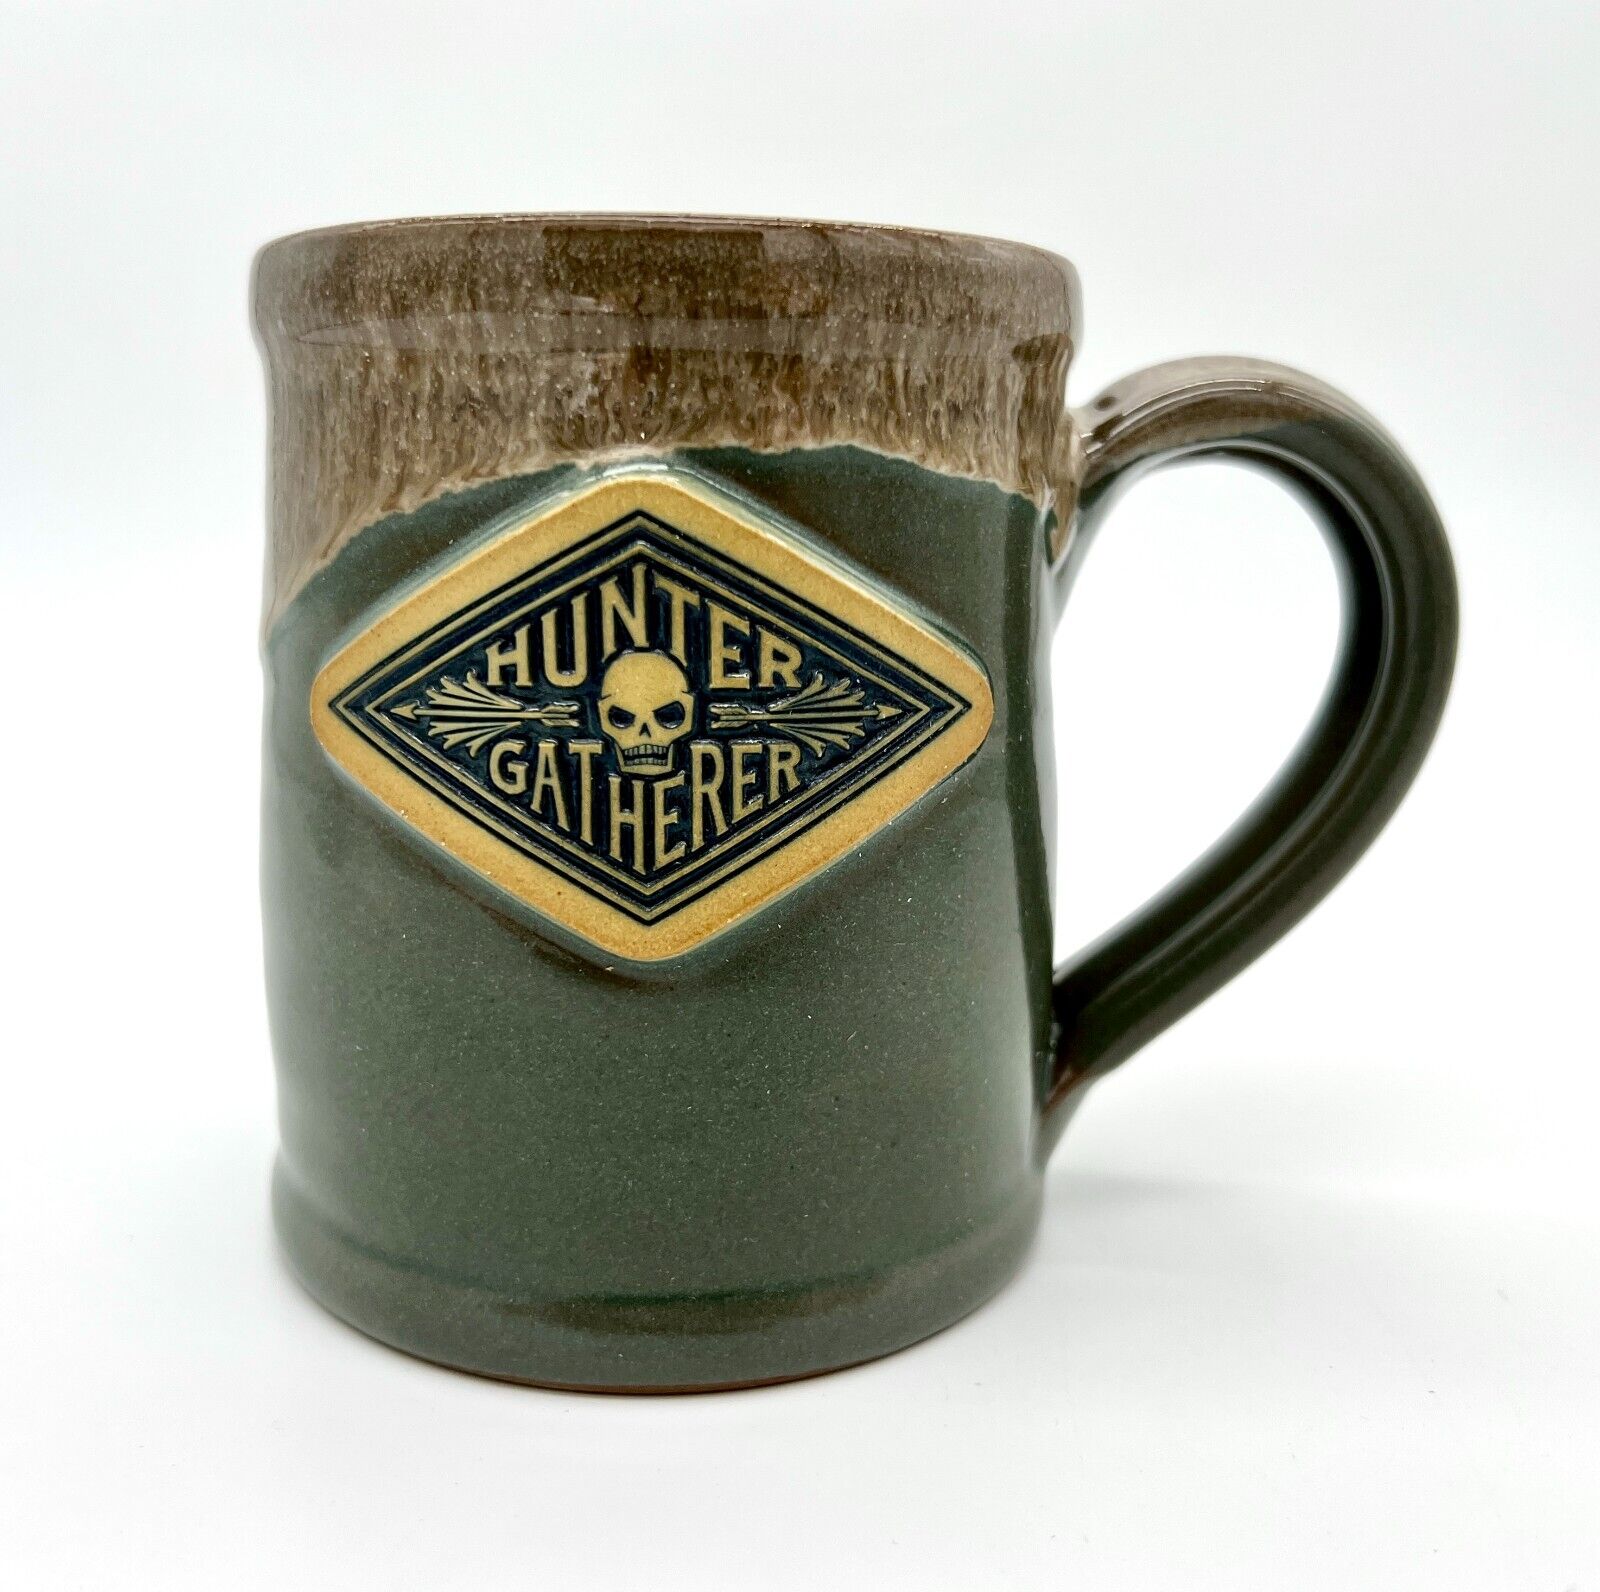 NEWLimited Edition-Prometheus Design Werx  X Deneen Rancher Hunter Gatherer Mug